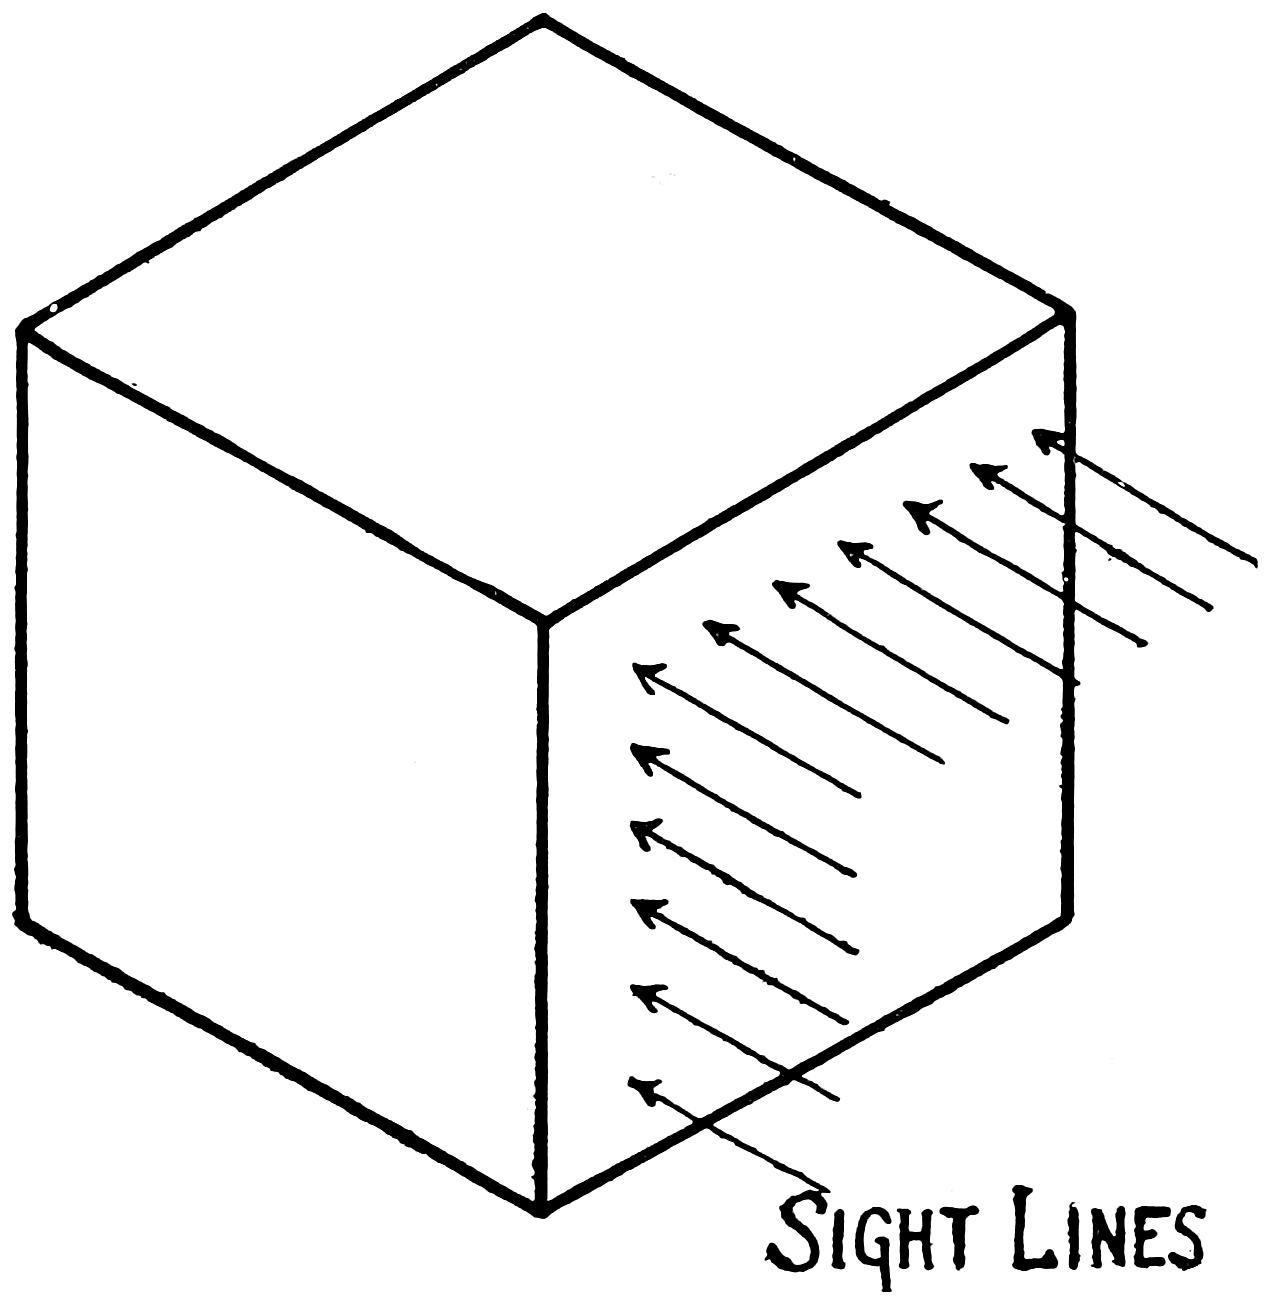 Sight lines